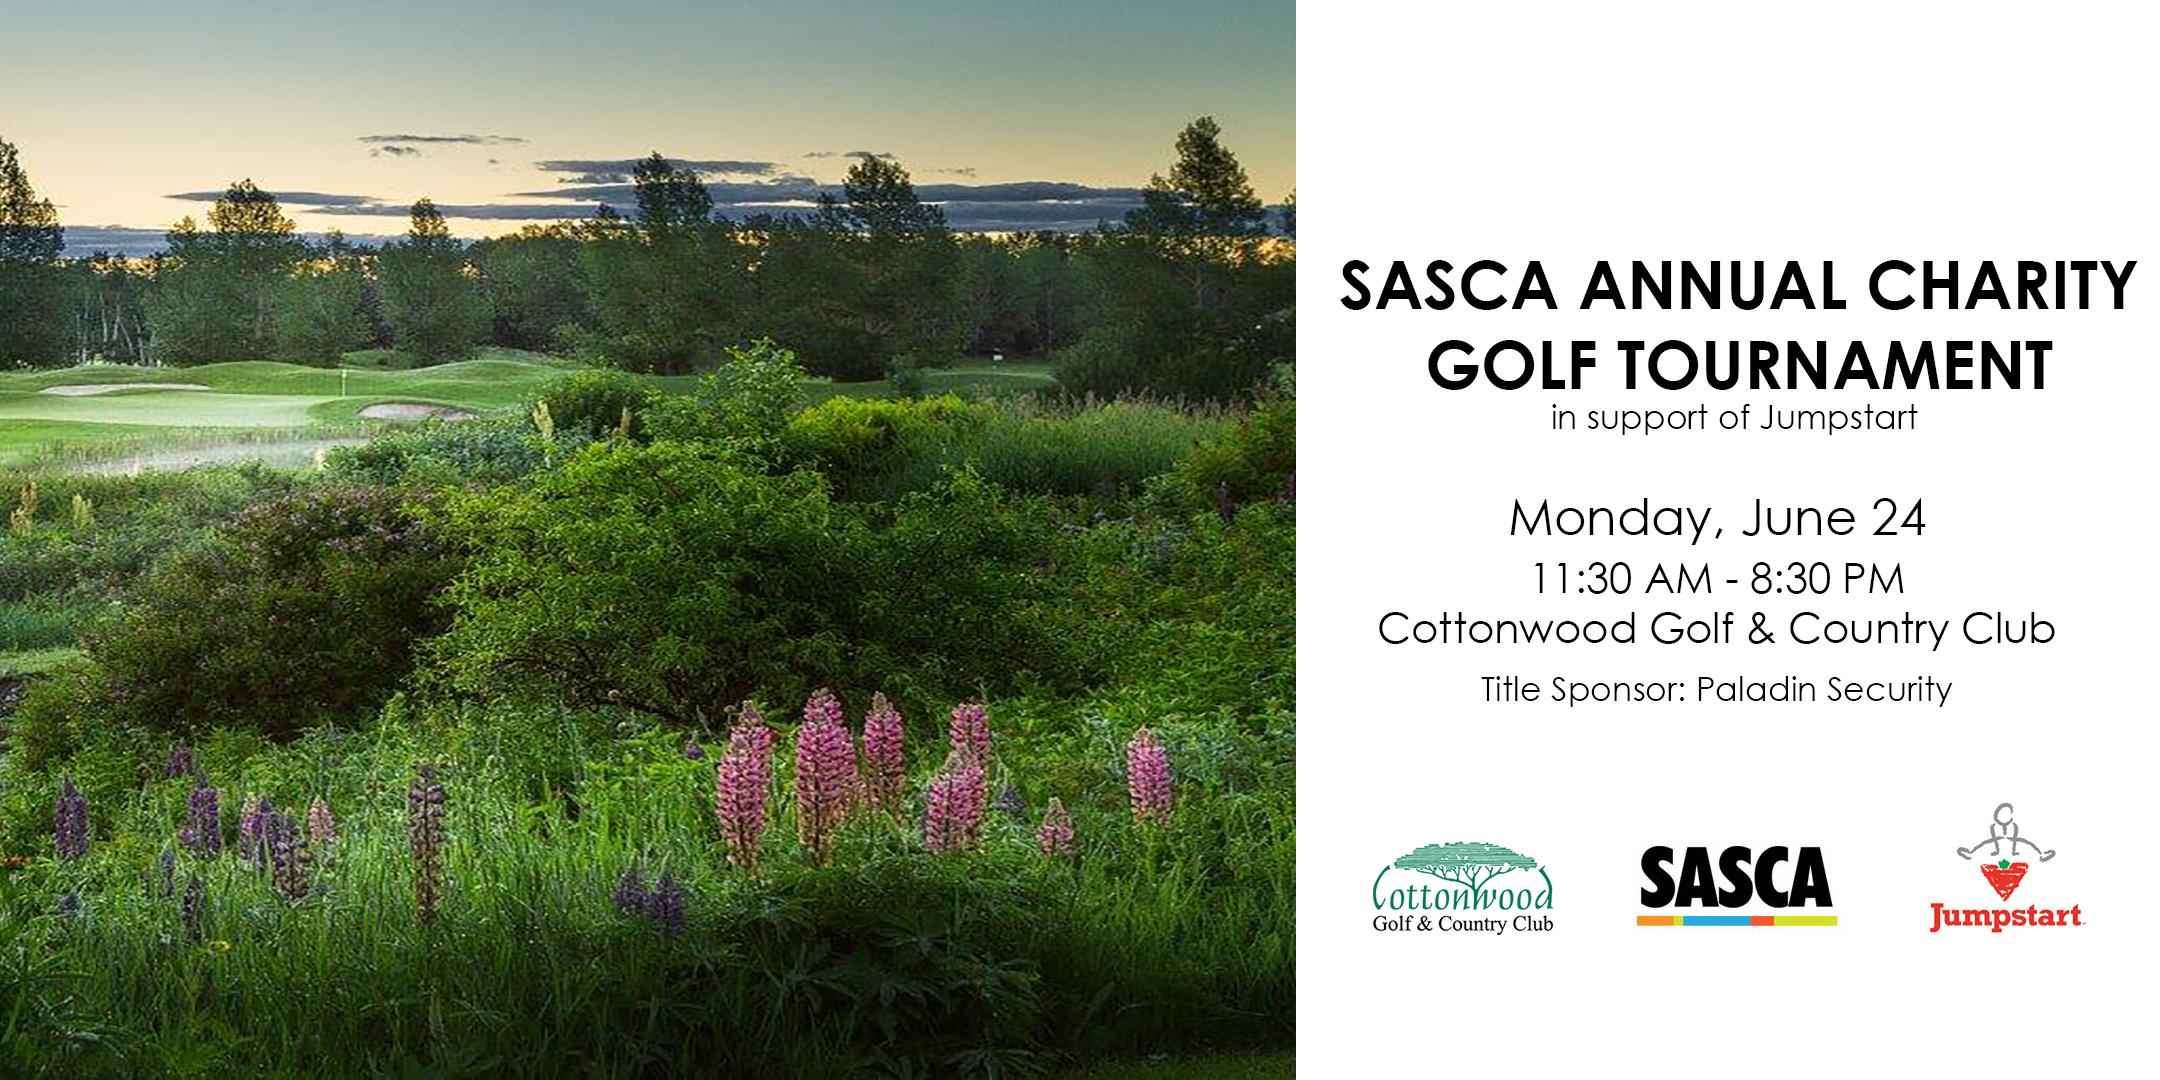 SASCA's Annual Charity Golf Tournament 2019